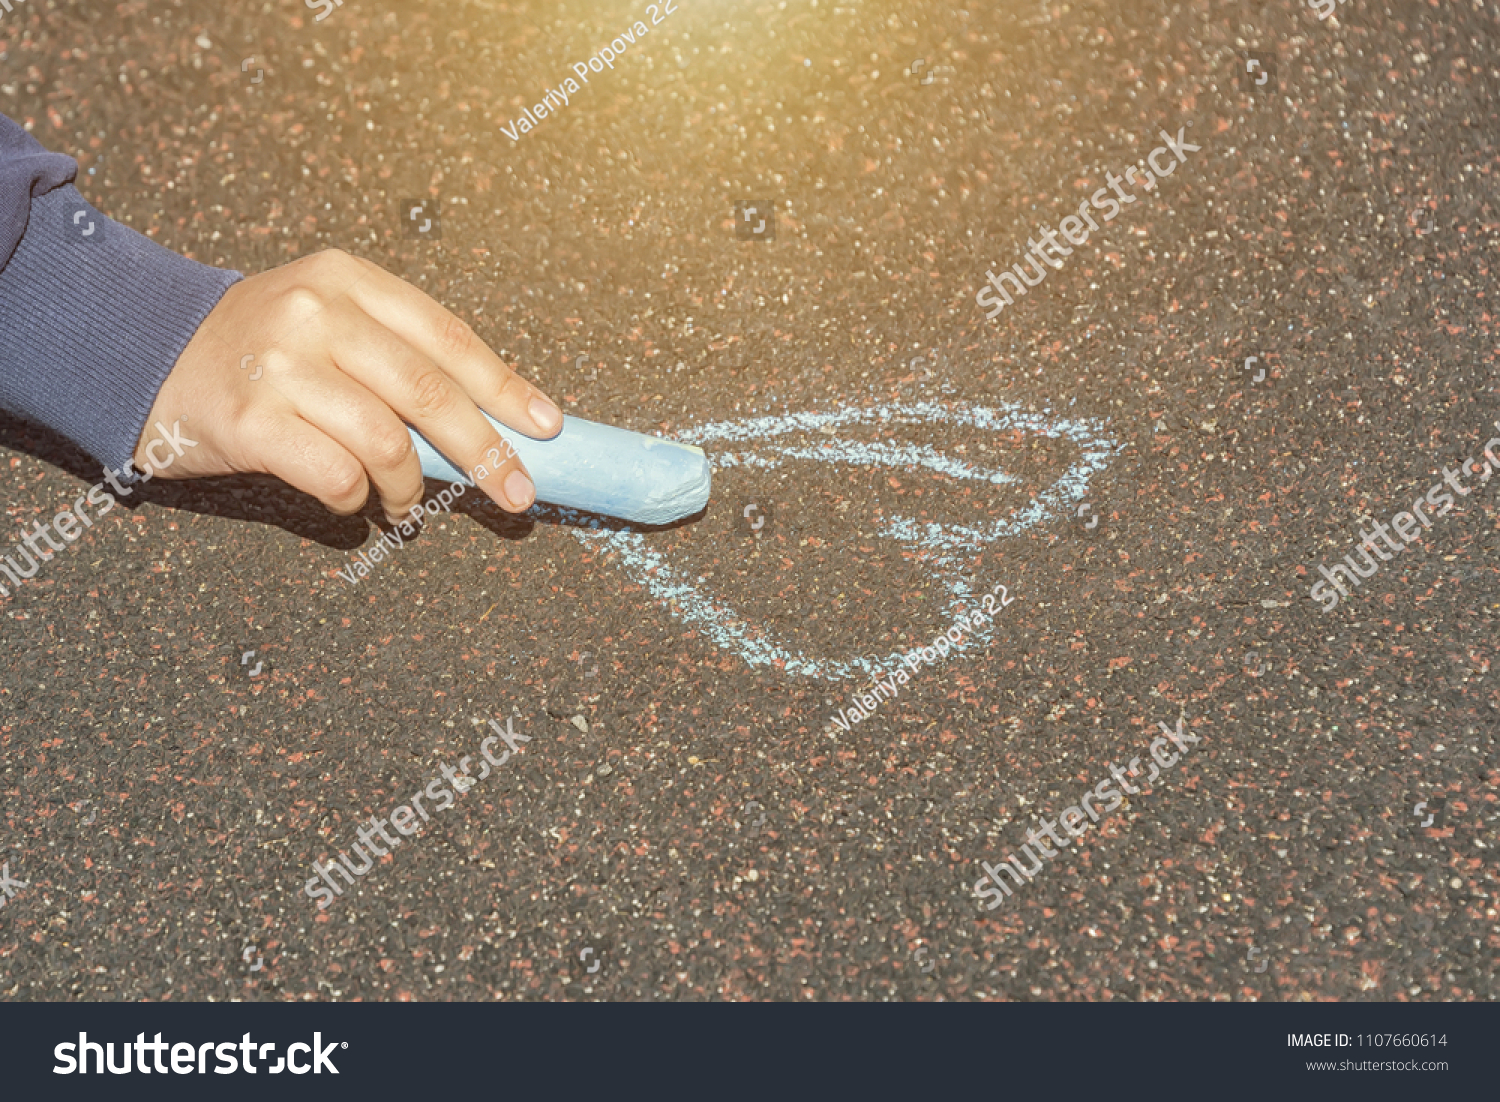 child's hand draws hearts, drawings chalk on asphalt #1107660614